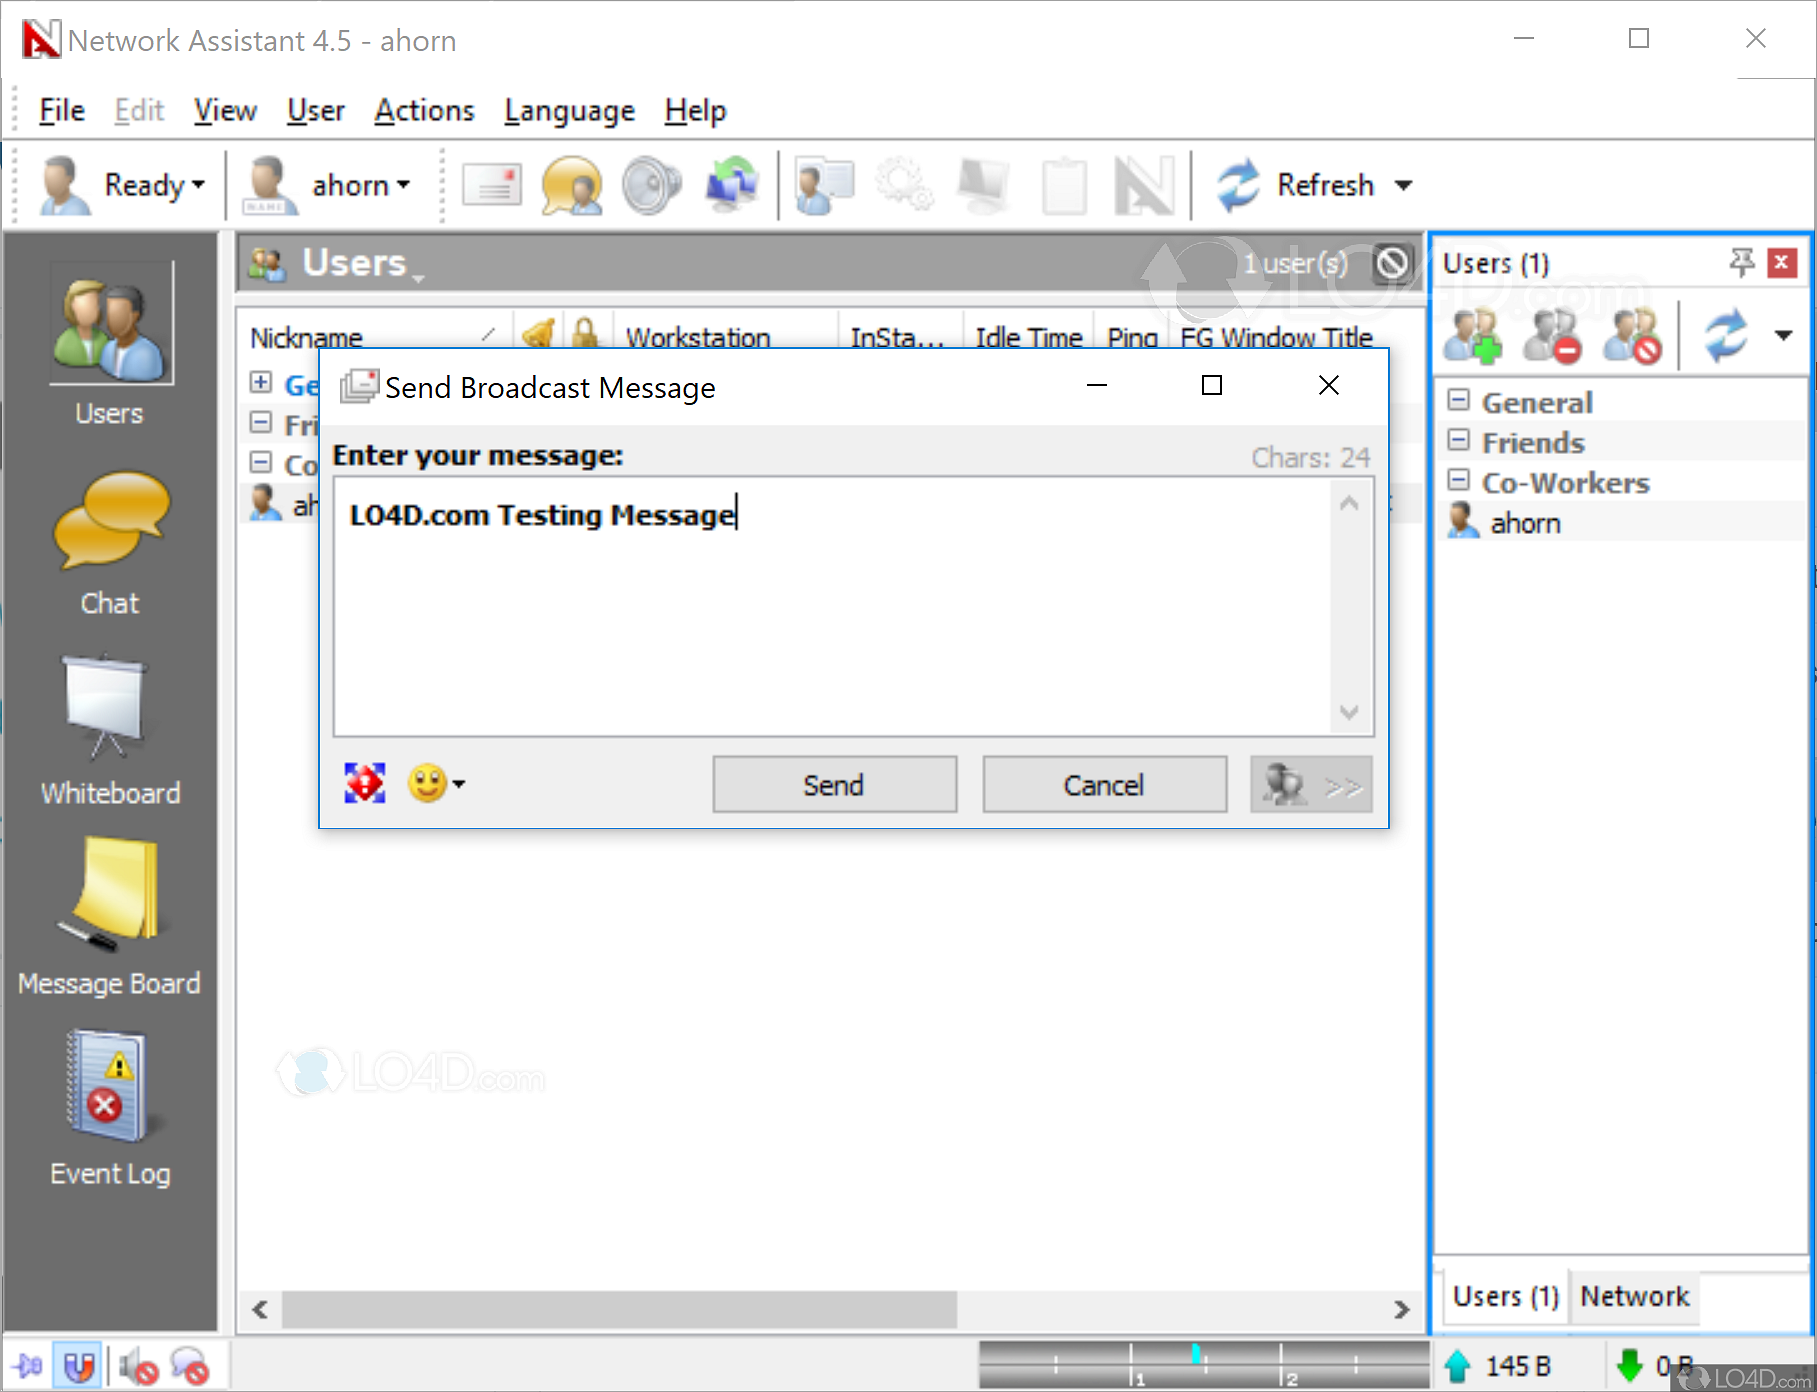 lacie network assistant download windows 10